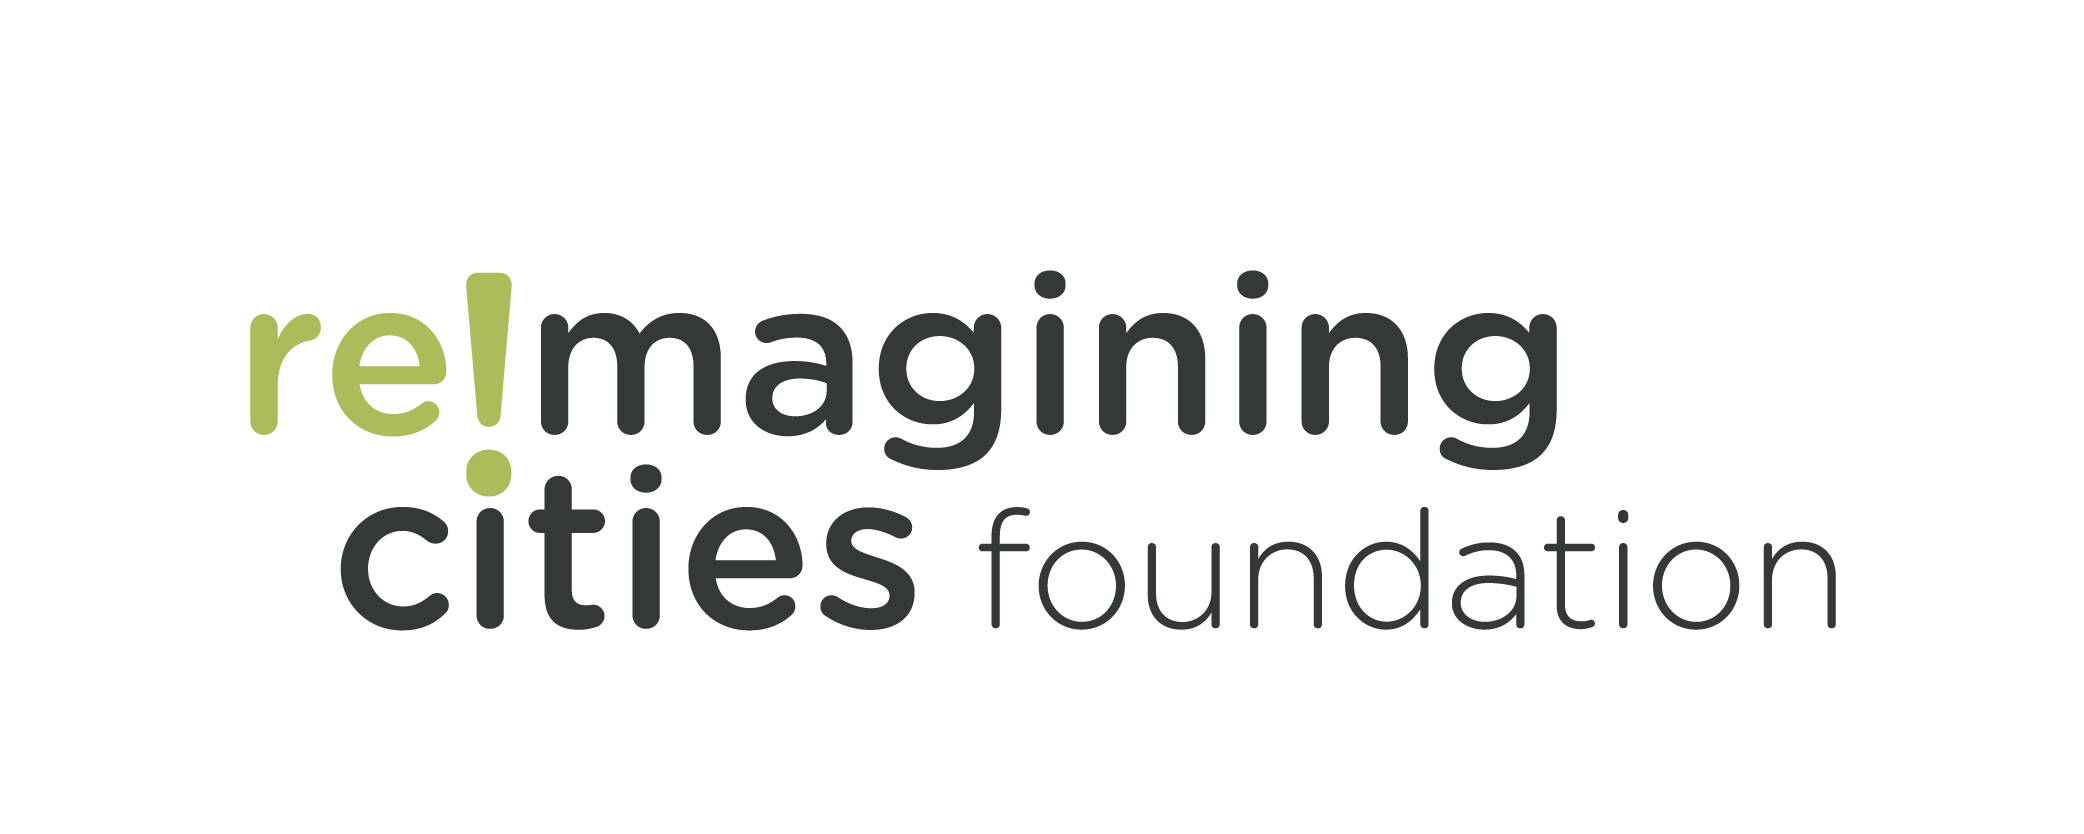 Re-imagining Cities Foundation